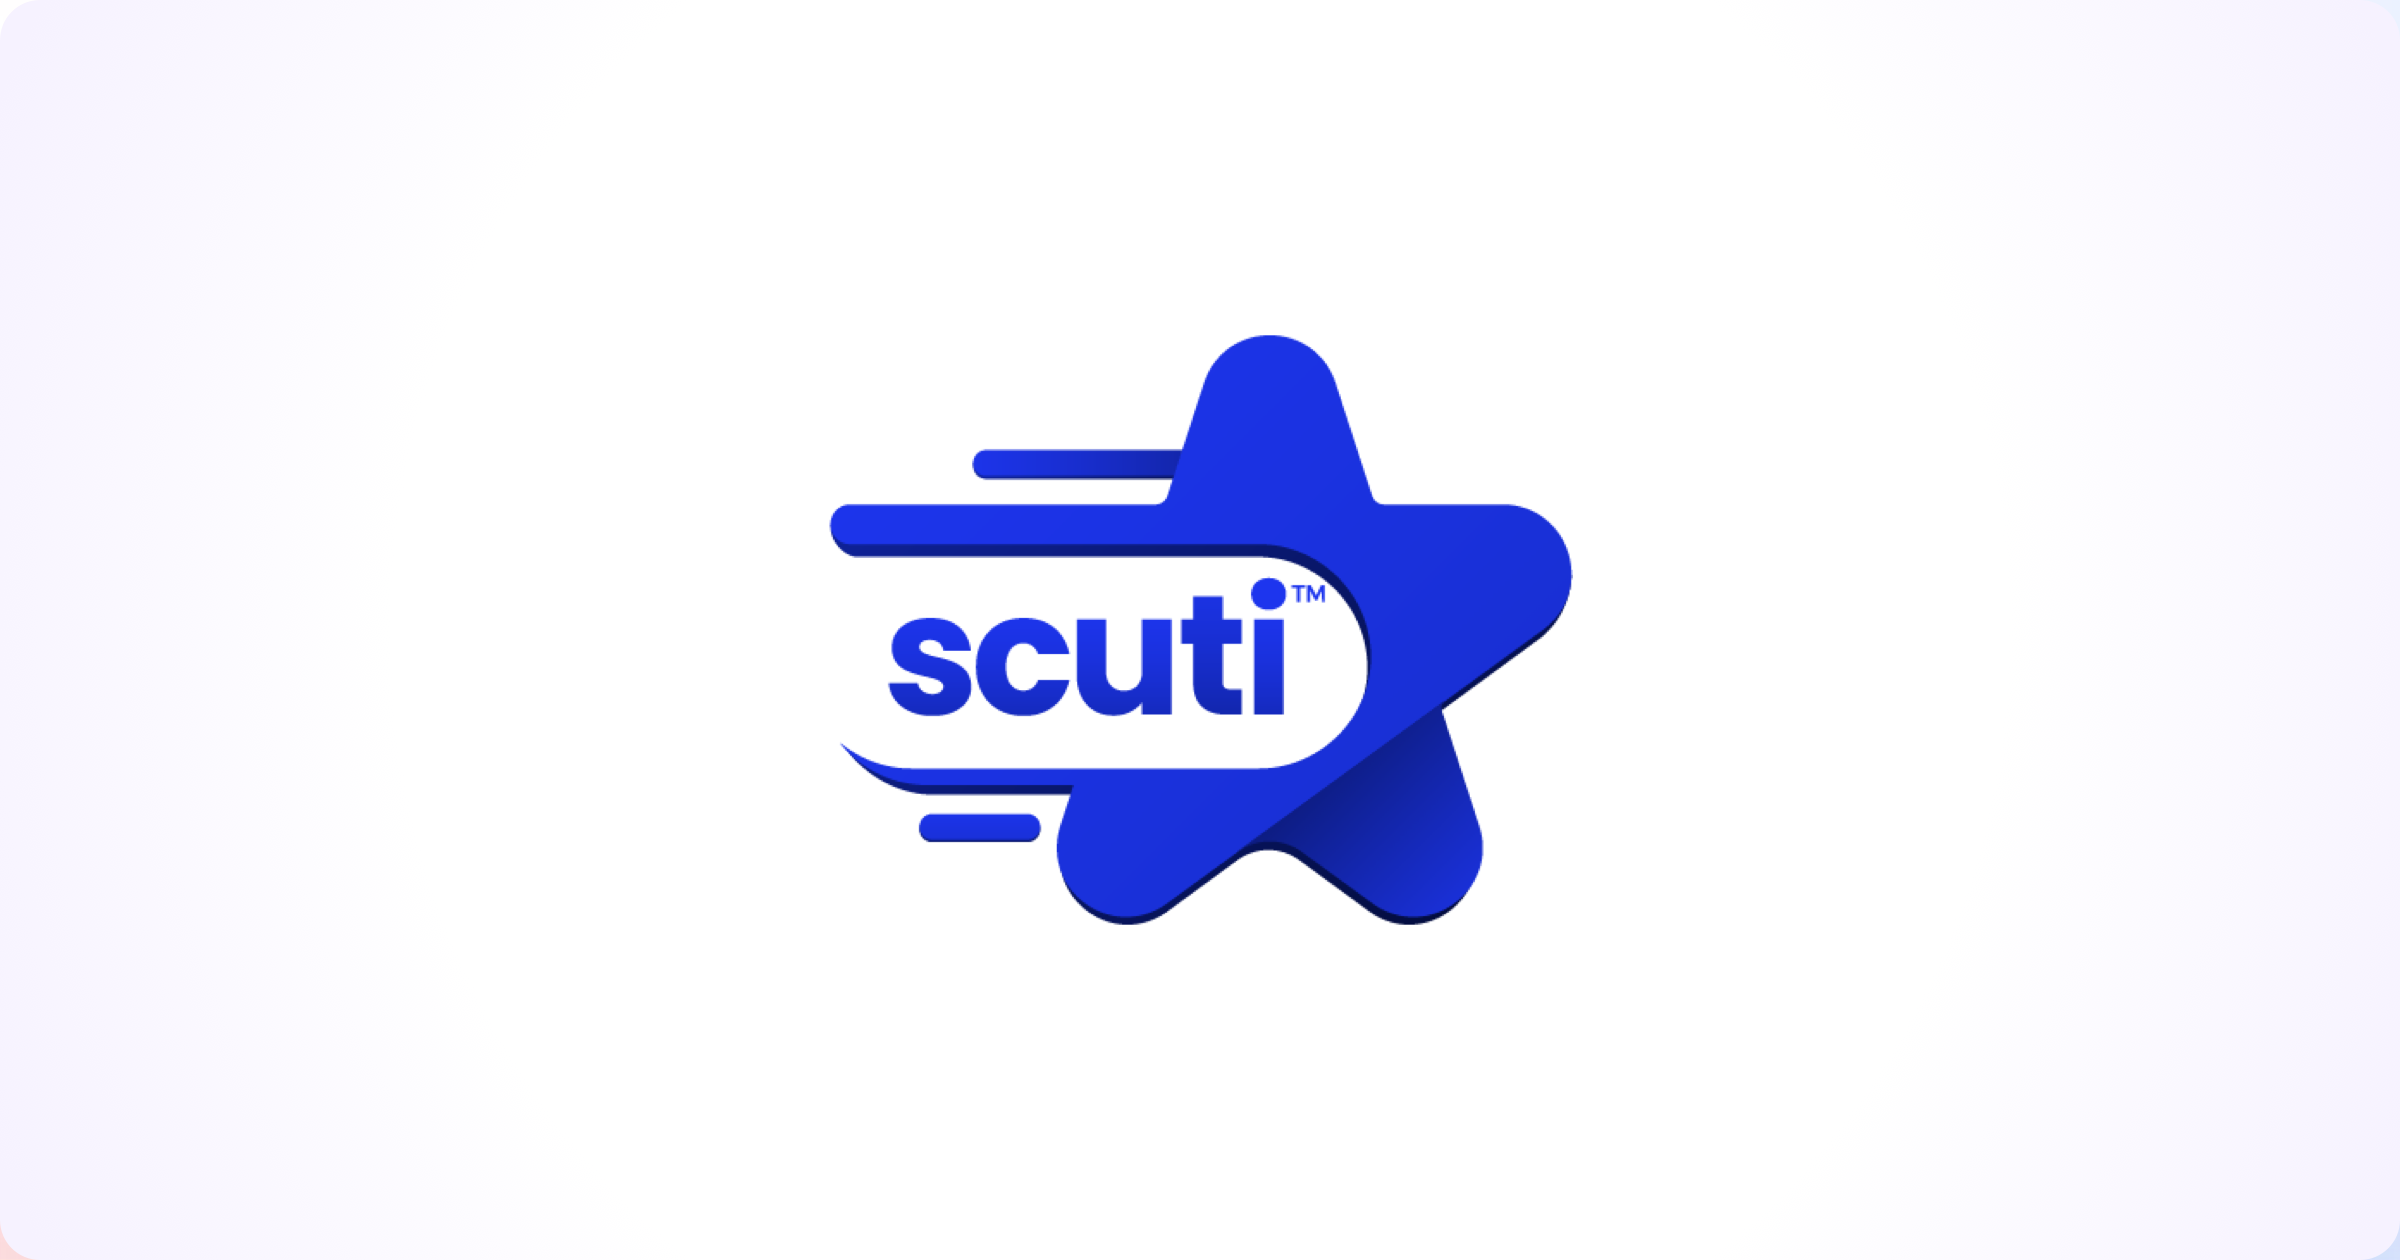 Scuti helps game developers generate new-found revenue streams